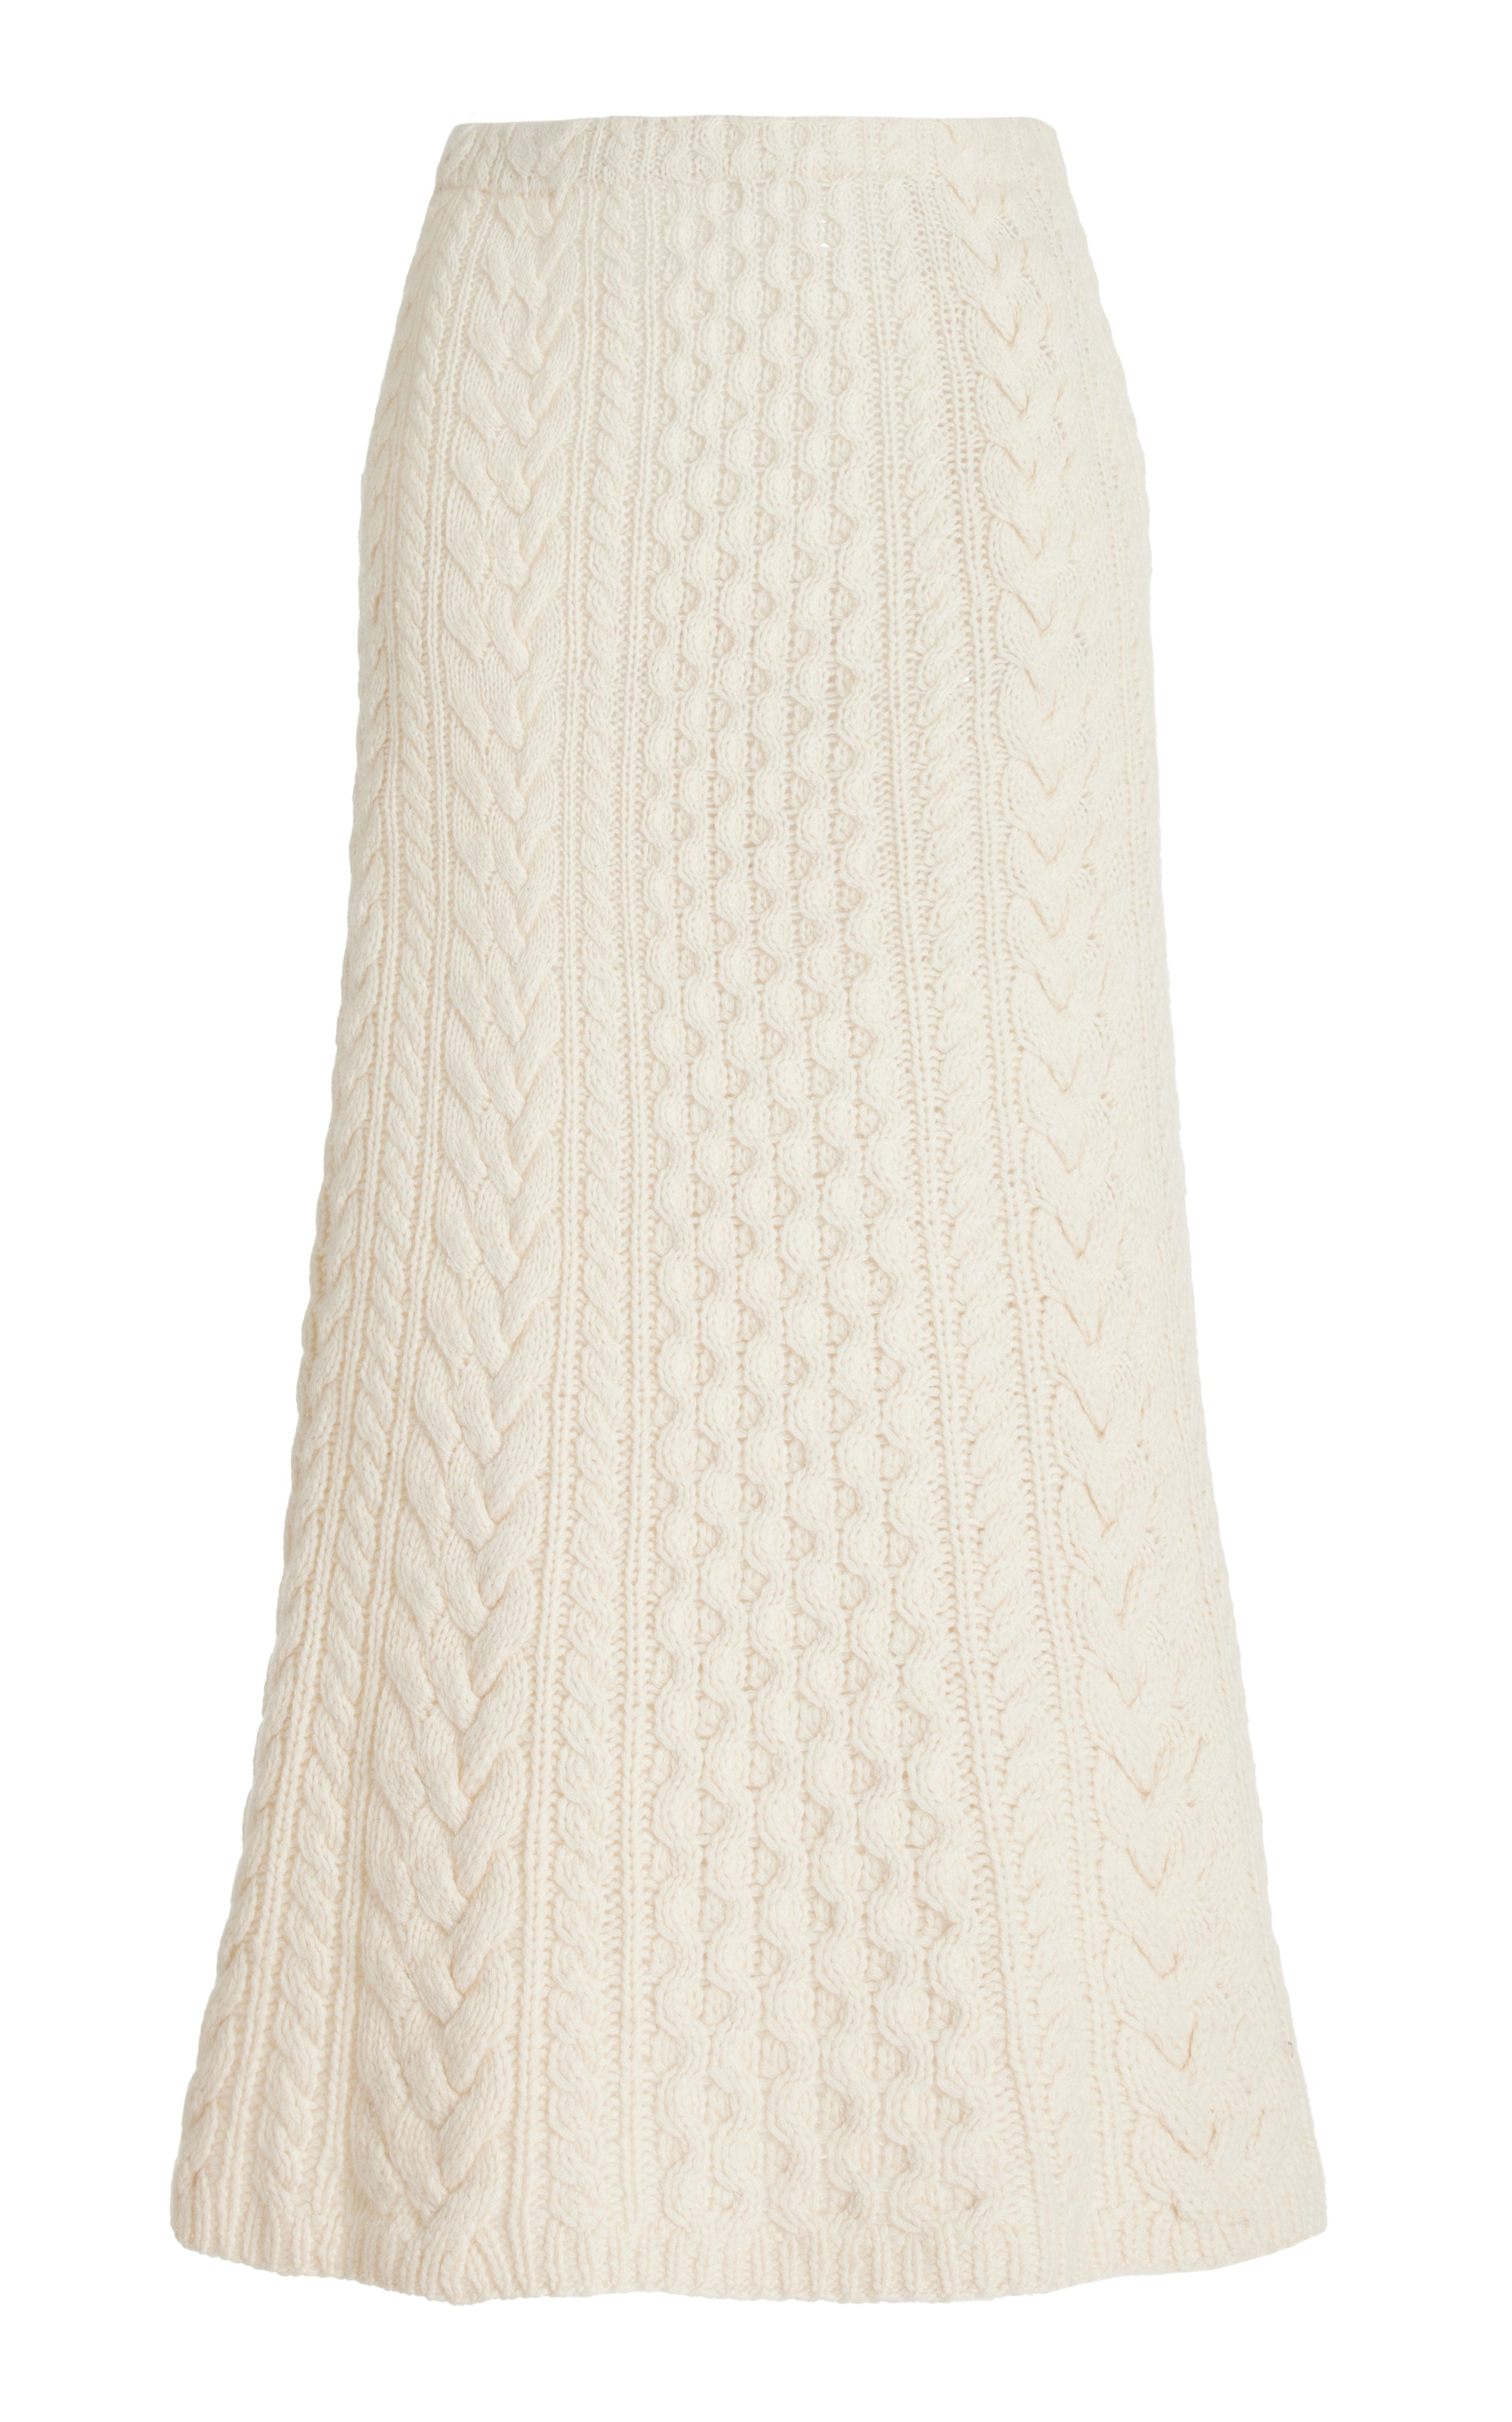 Callum Skirt in Ivory Cashmere - 1